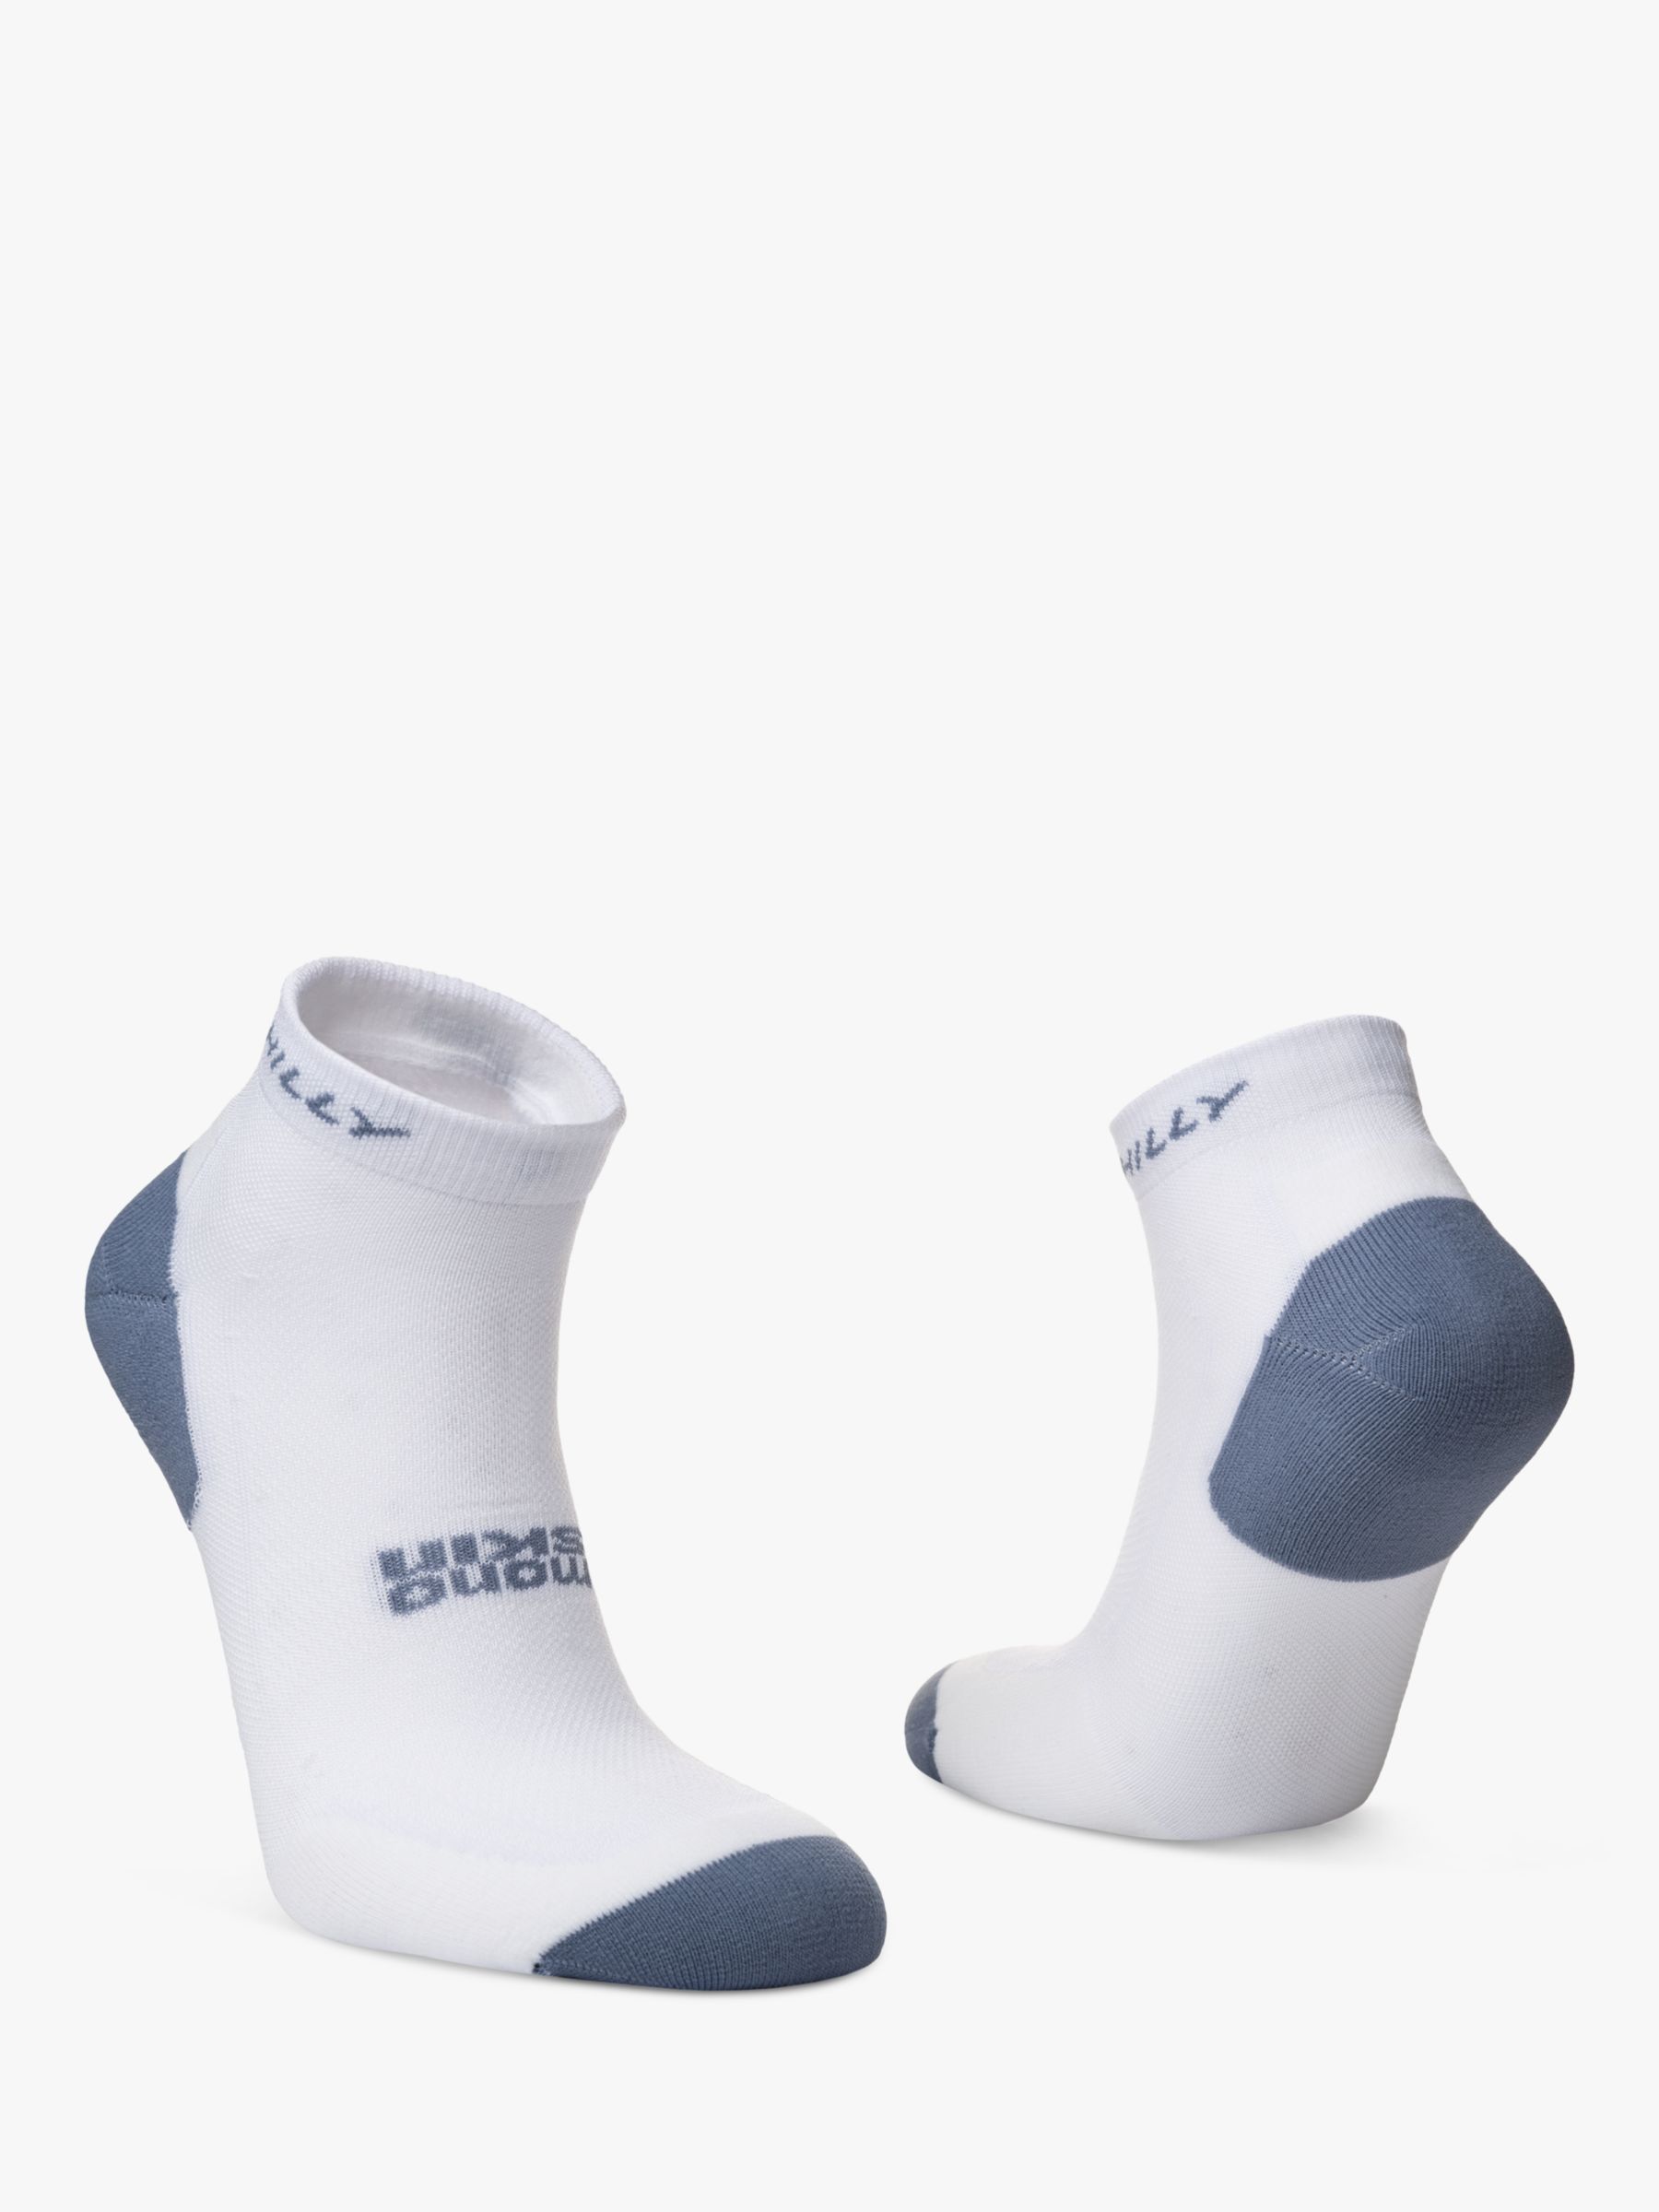 Buy Hilly Active Quarter Length Running Socks, Pack of 2 Online at johnlewis.com